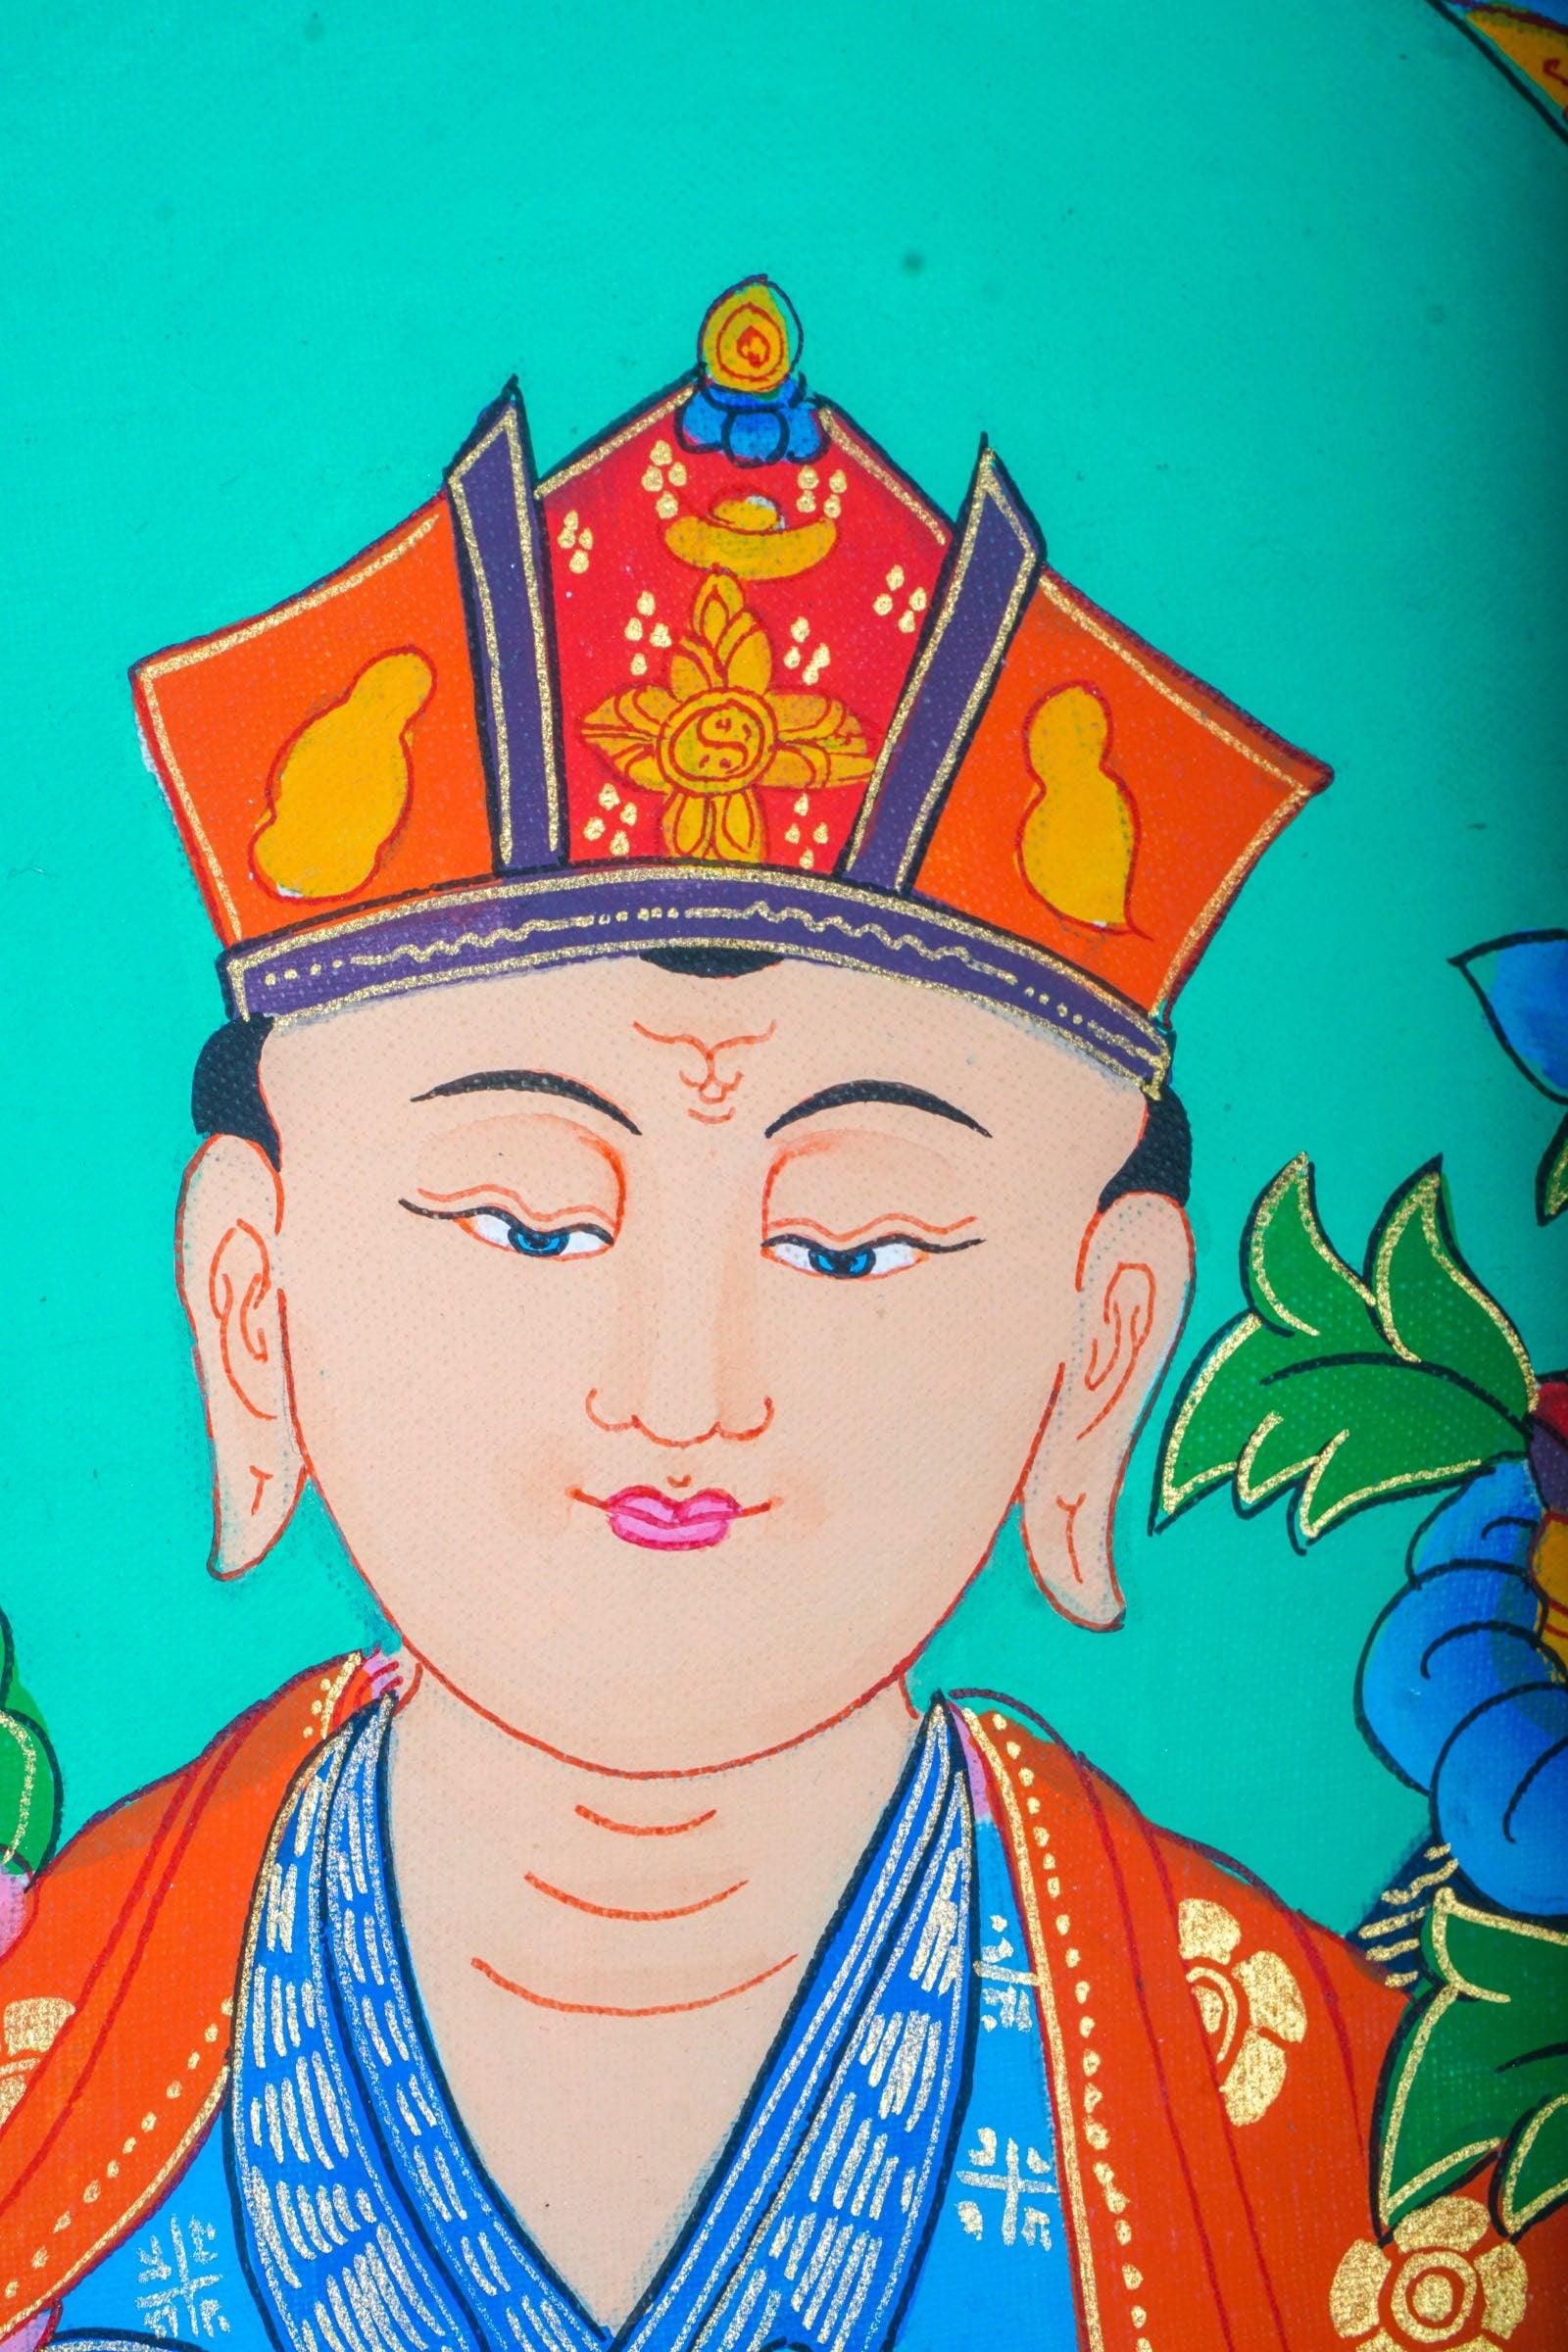 Karmapa handmade thangka art for home décor and mediational practice